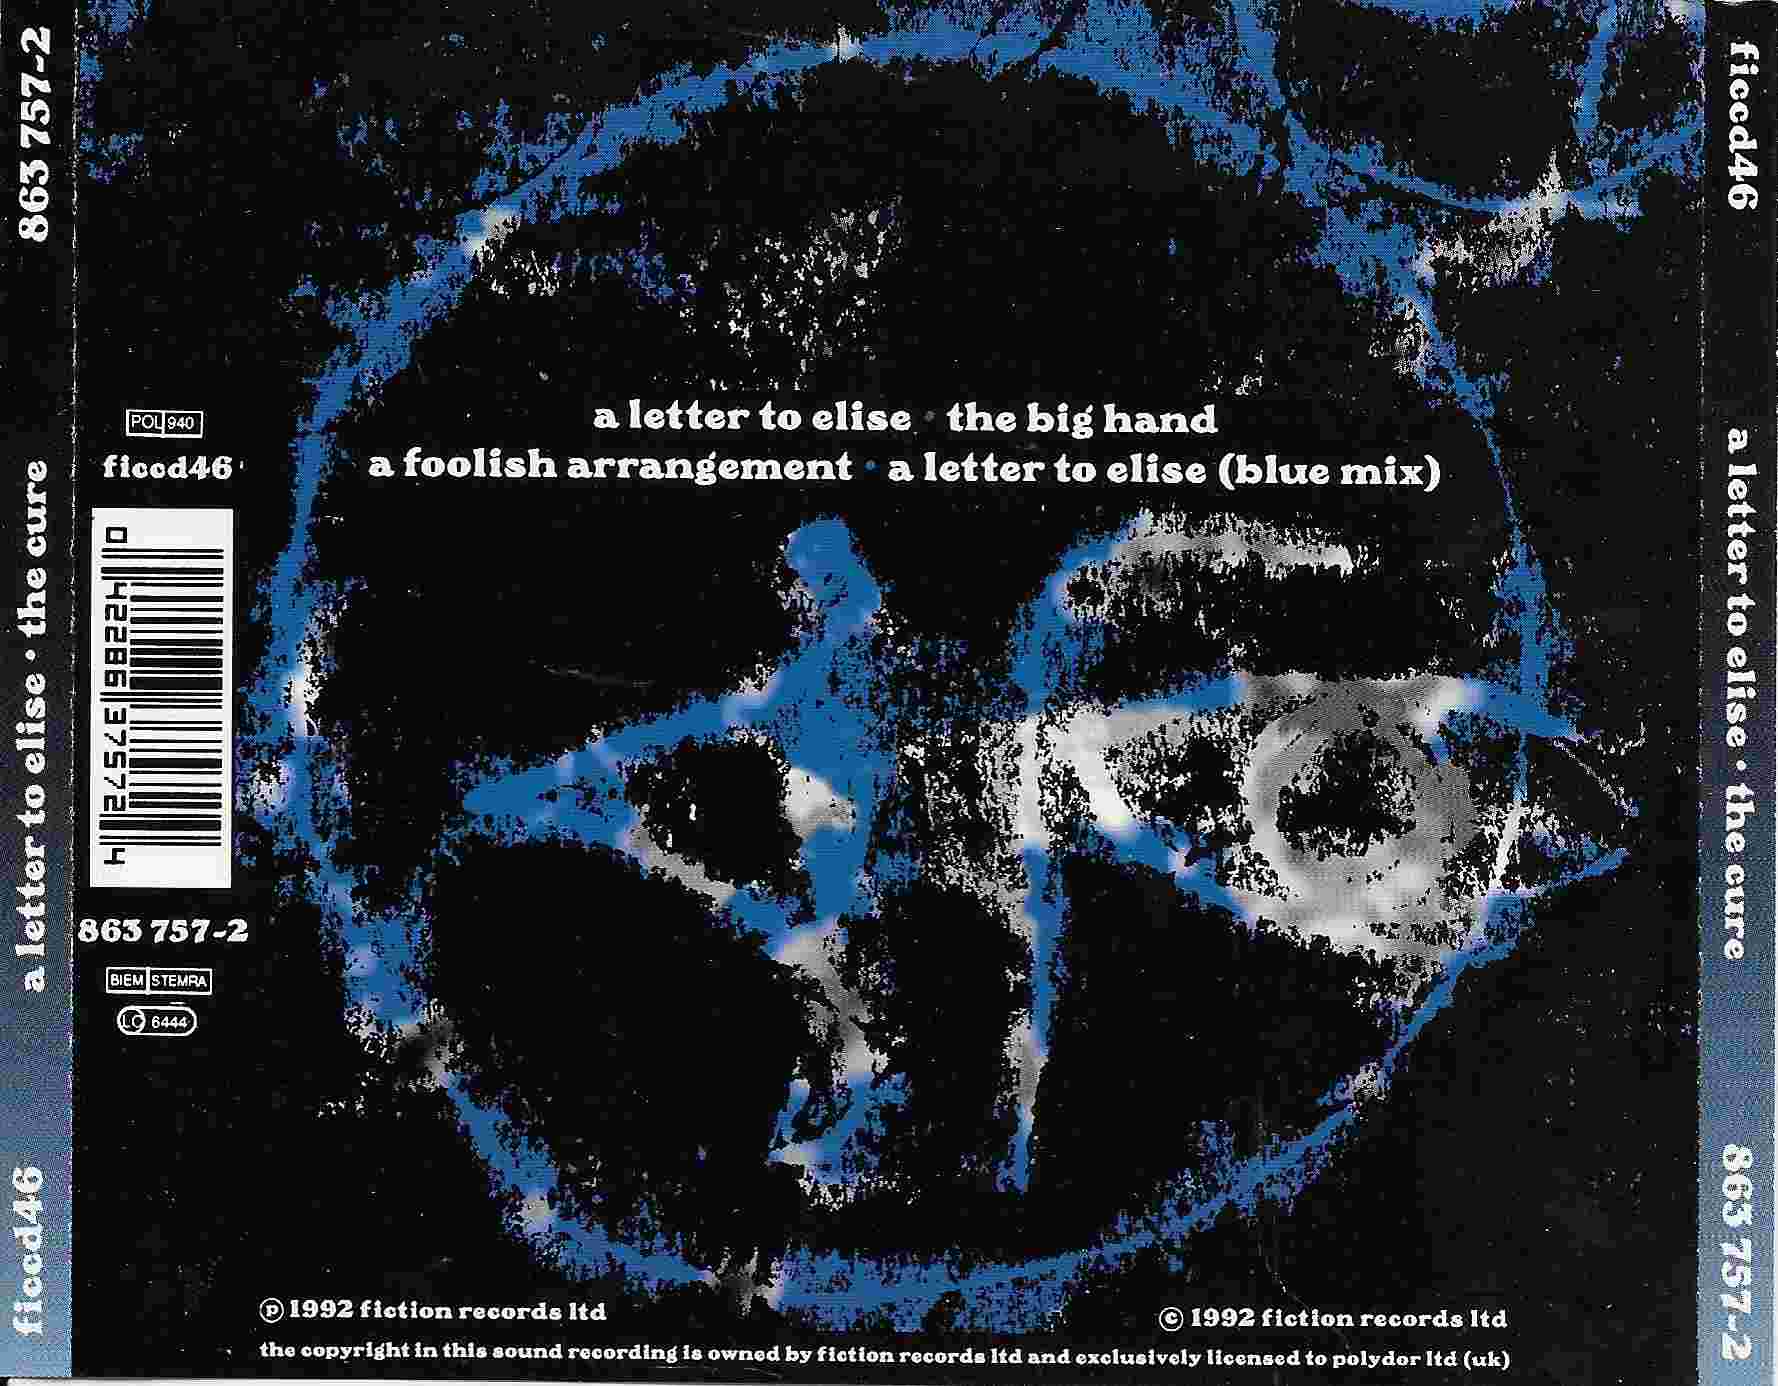 Back cover of FIC CD 46